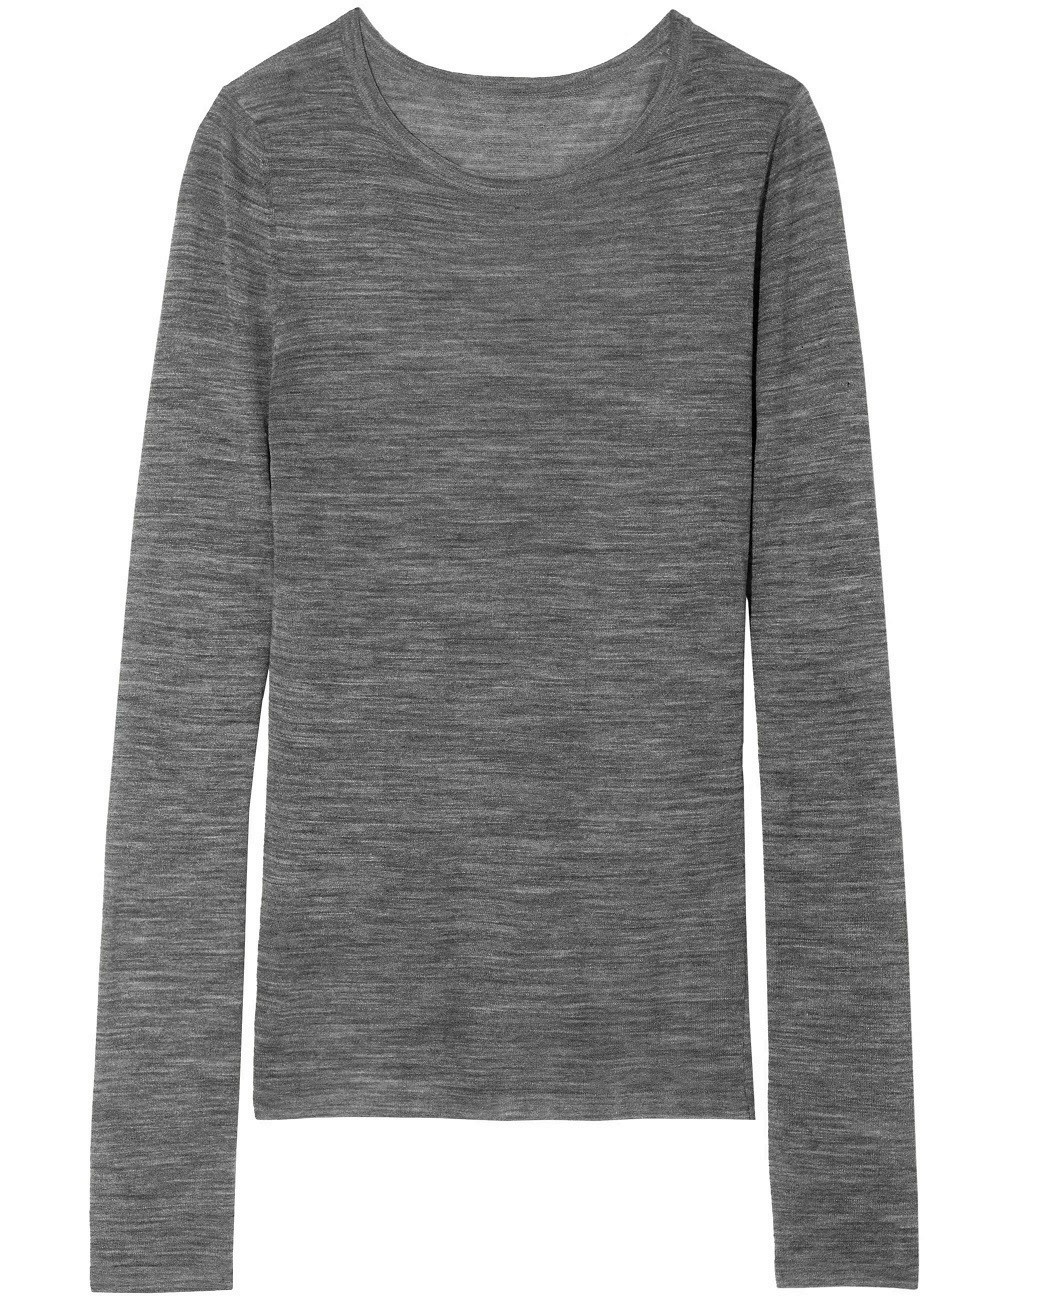 NILI LOTAN Silk Knit Sweater Candice in Dark Grey Melange